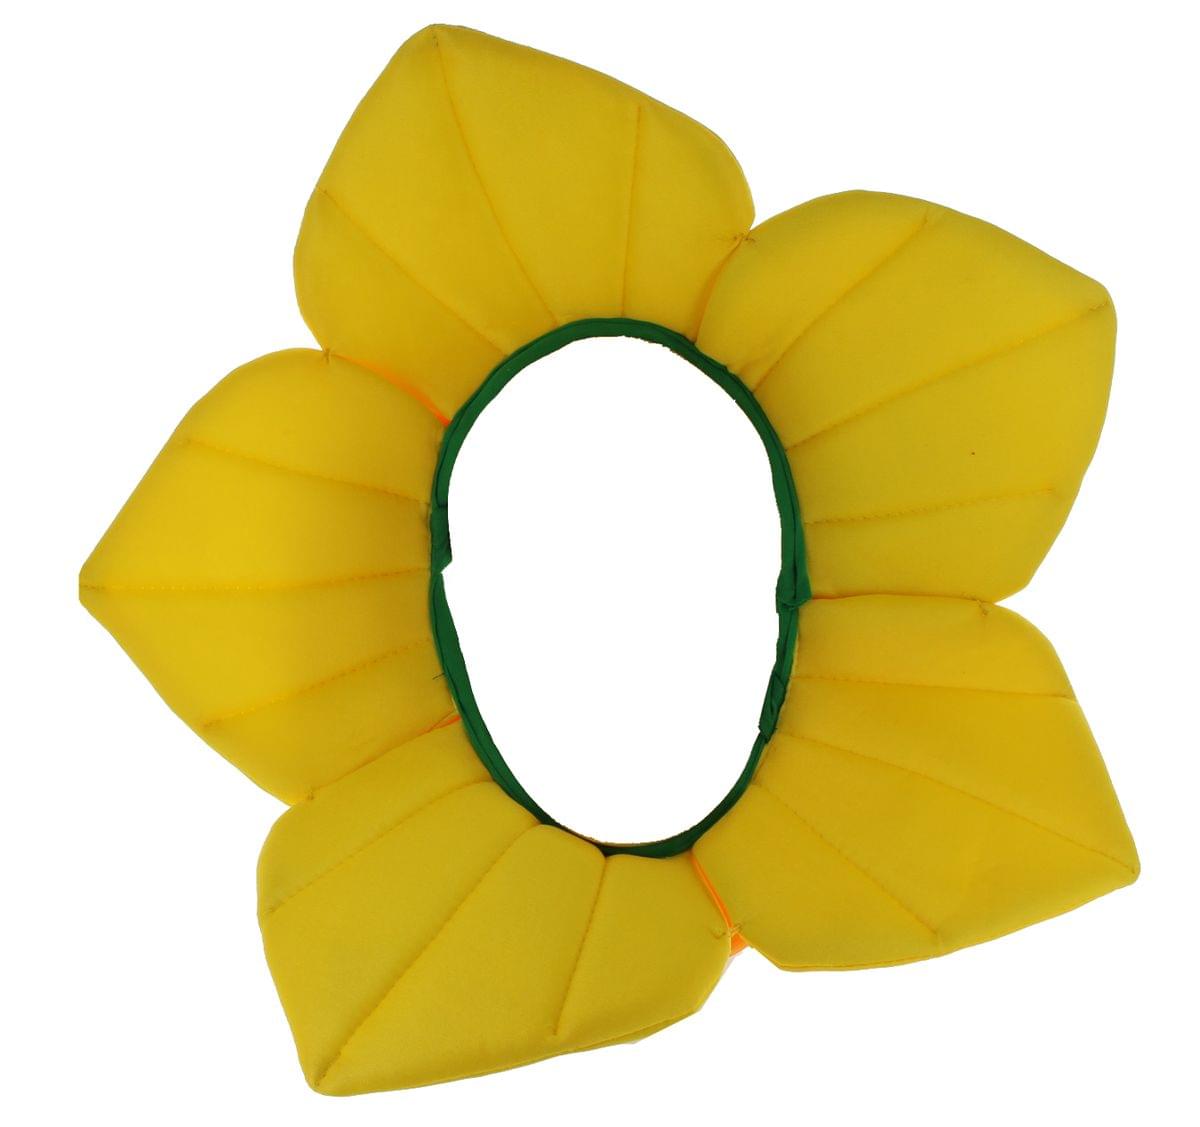 Daffodil Adult Costume Headpiece